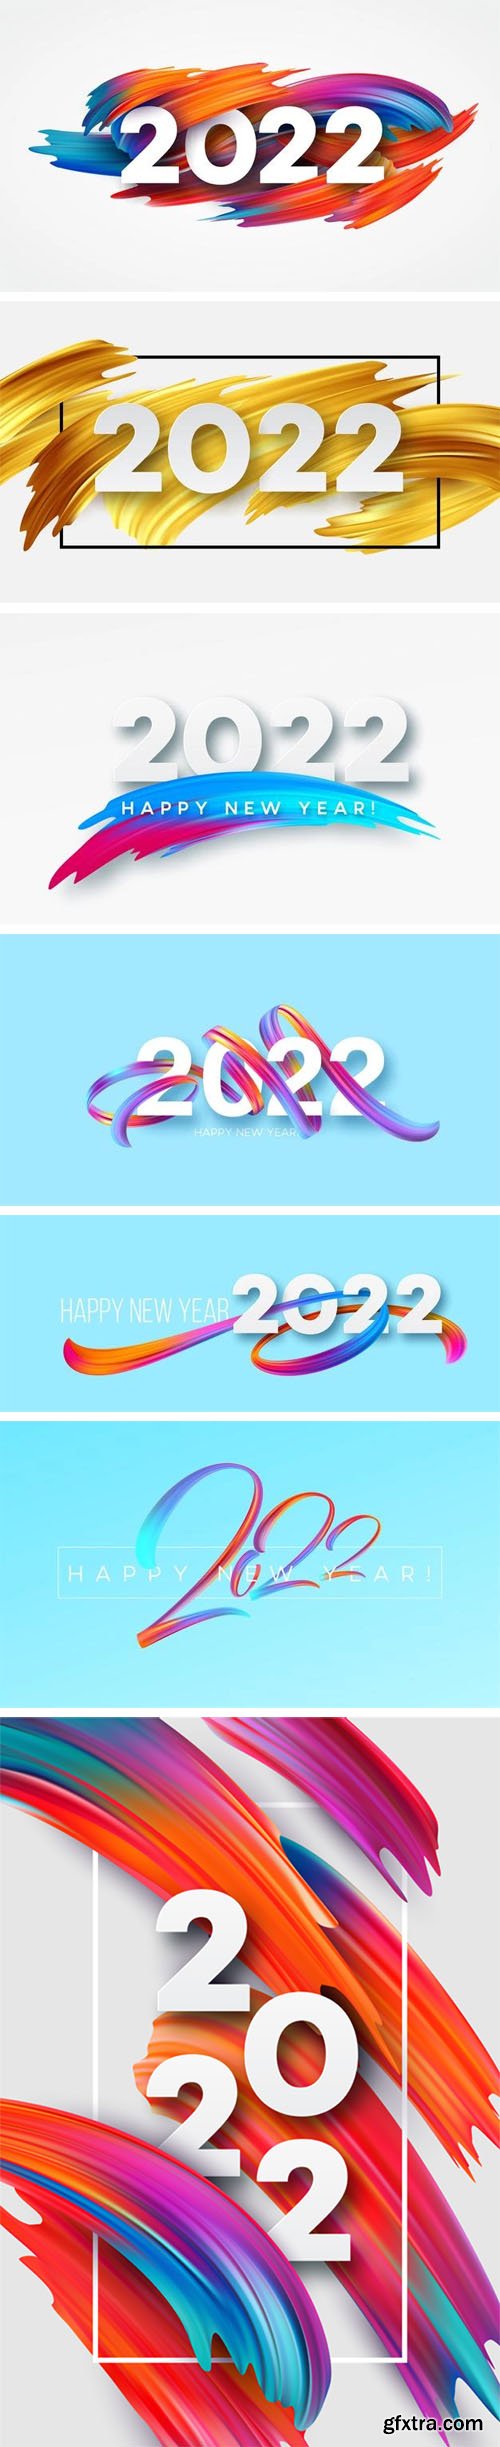 Happy New Year 2022 Calendar Headers + Backgrounds Vector Templates